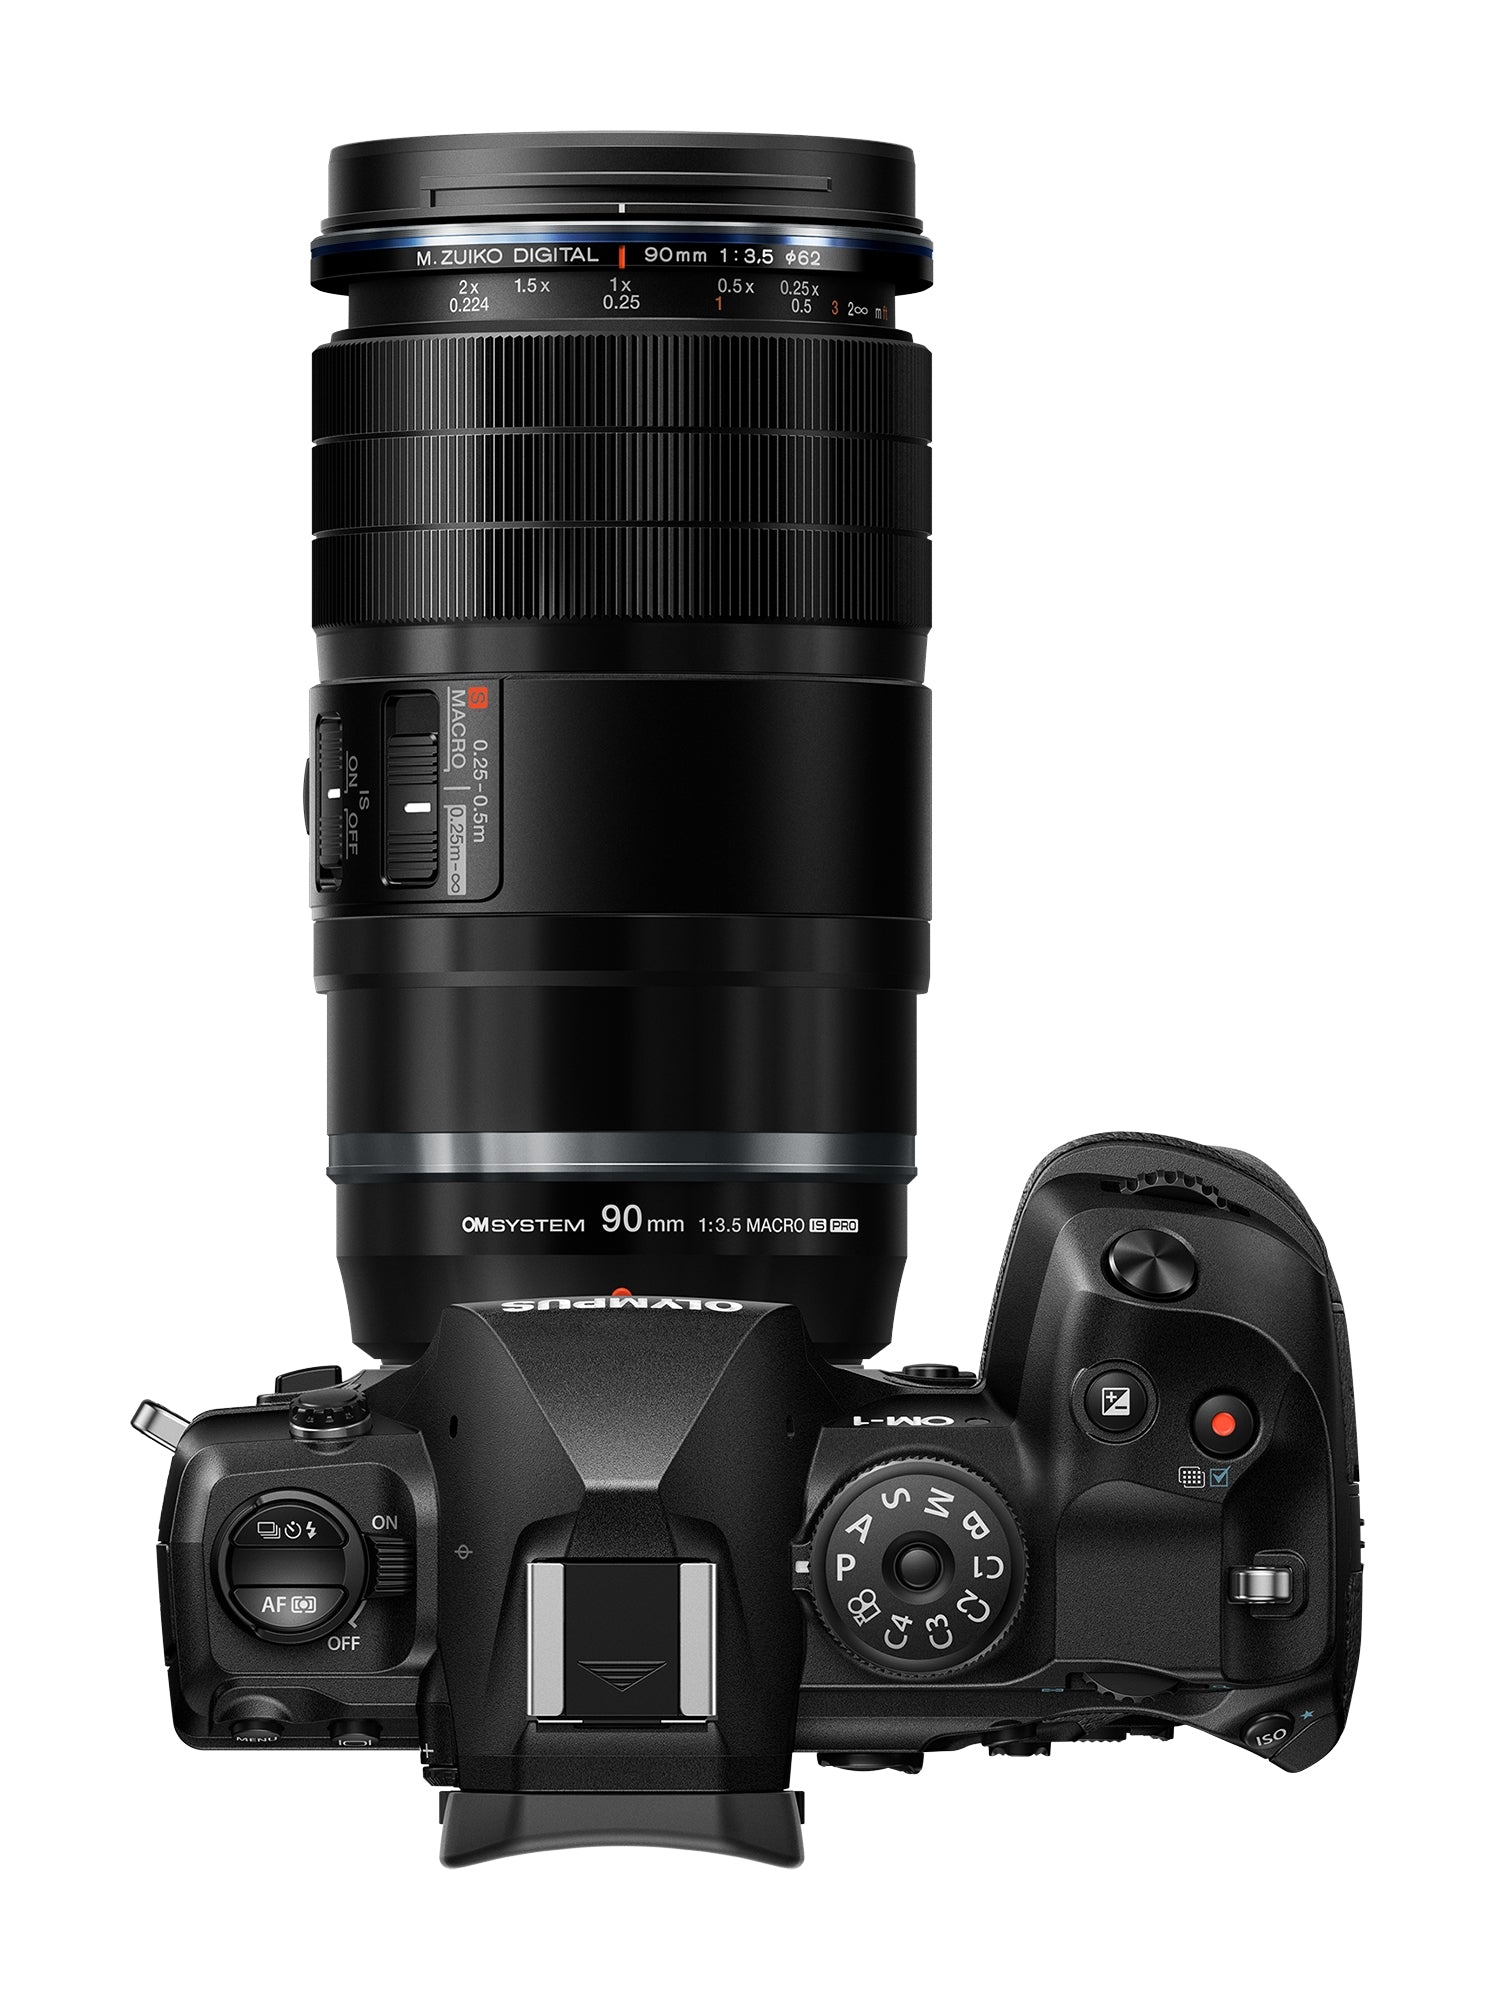 Olympus OM System M.Zuiko Digital ED 90mm F3.5 Macro IS PRO Lens